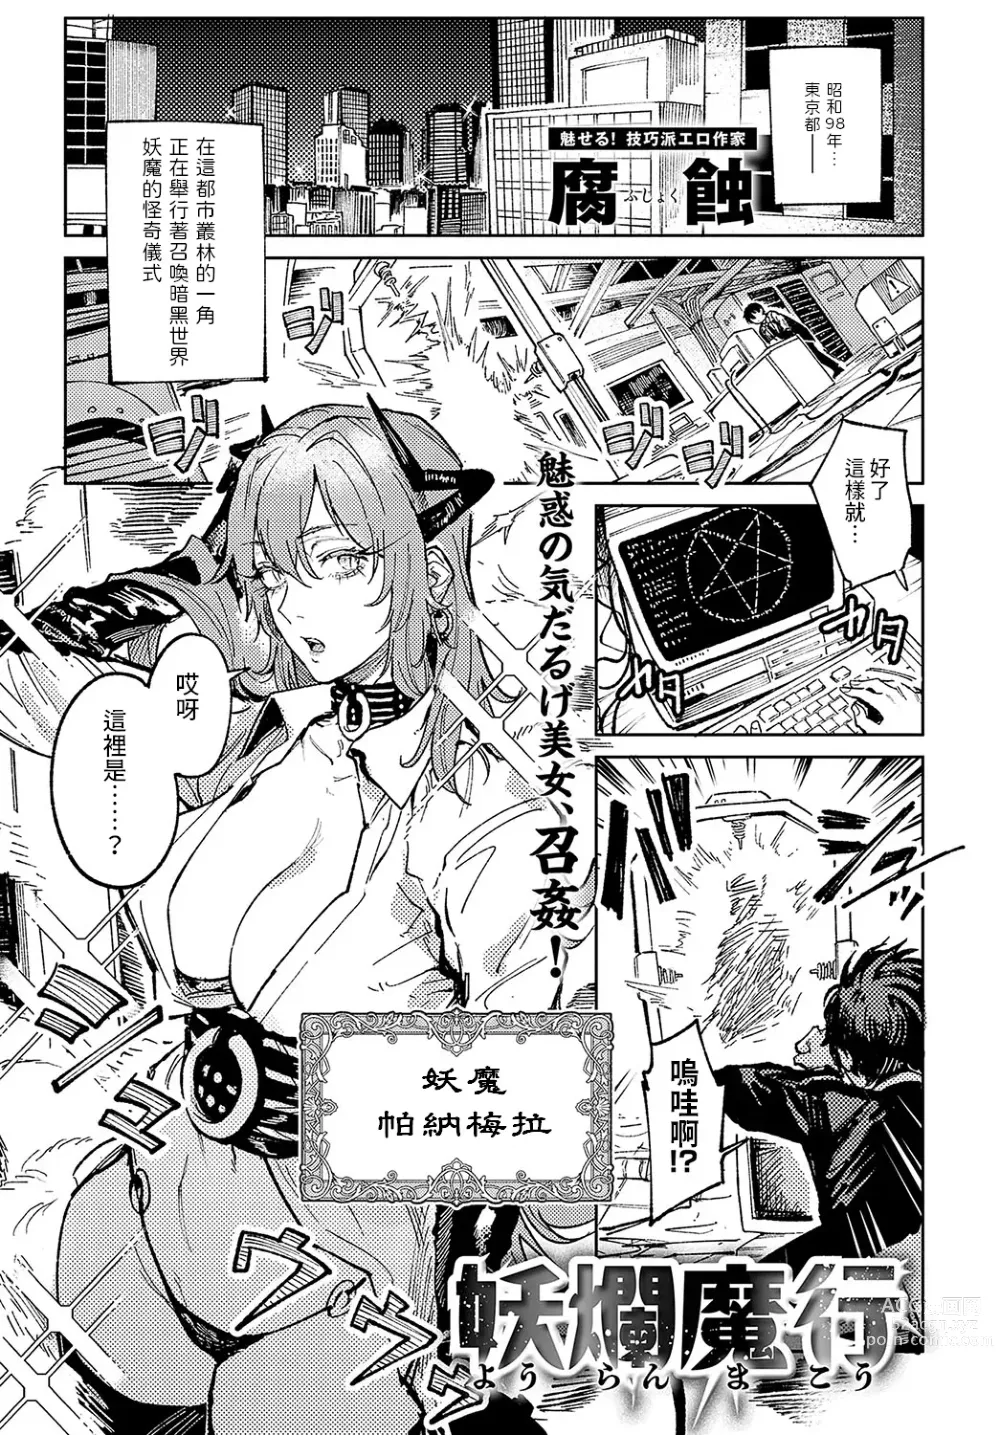 Page 1 of manga Youran Makou